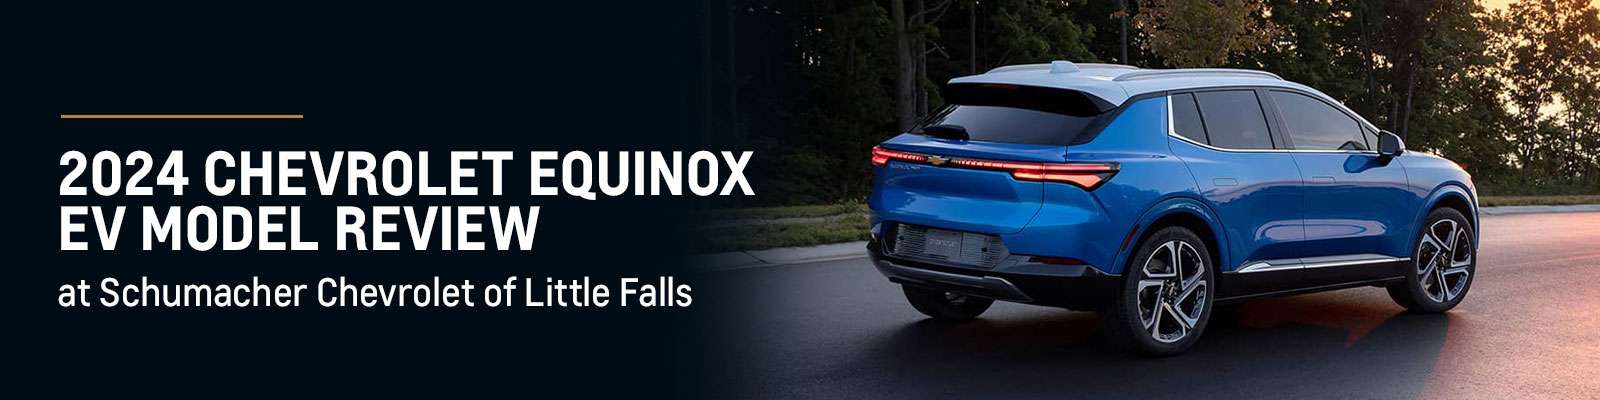 Chevrolet Equinox EV Model Overview - Schumacher Chevrolet of Little Falls